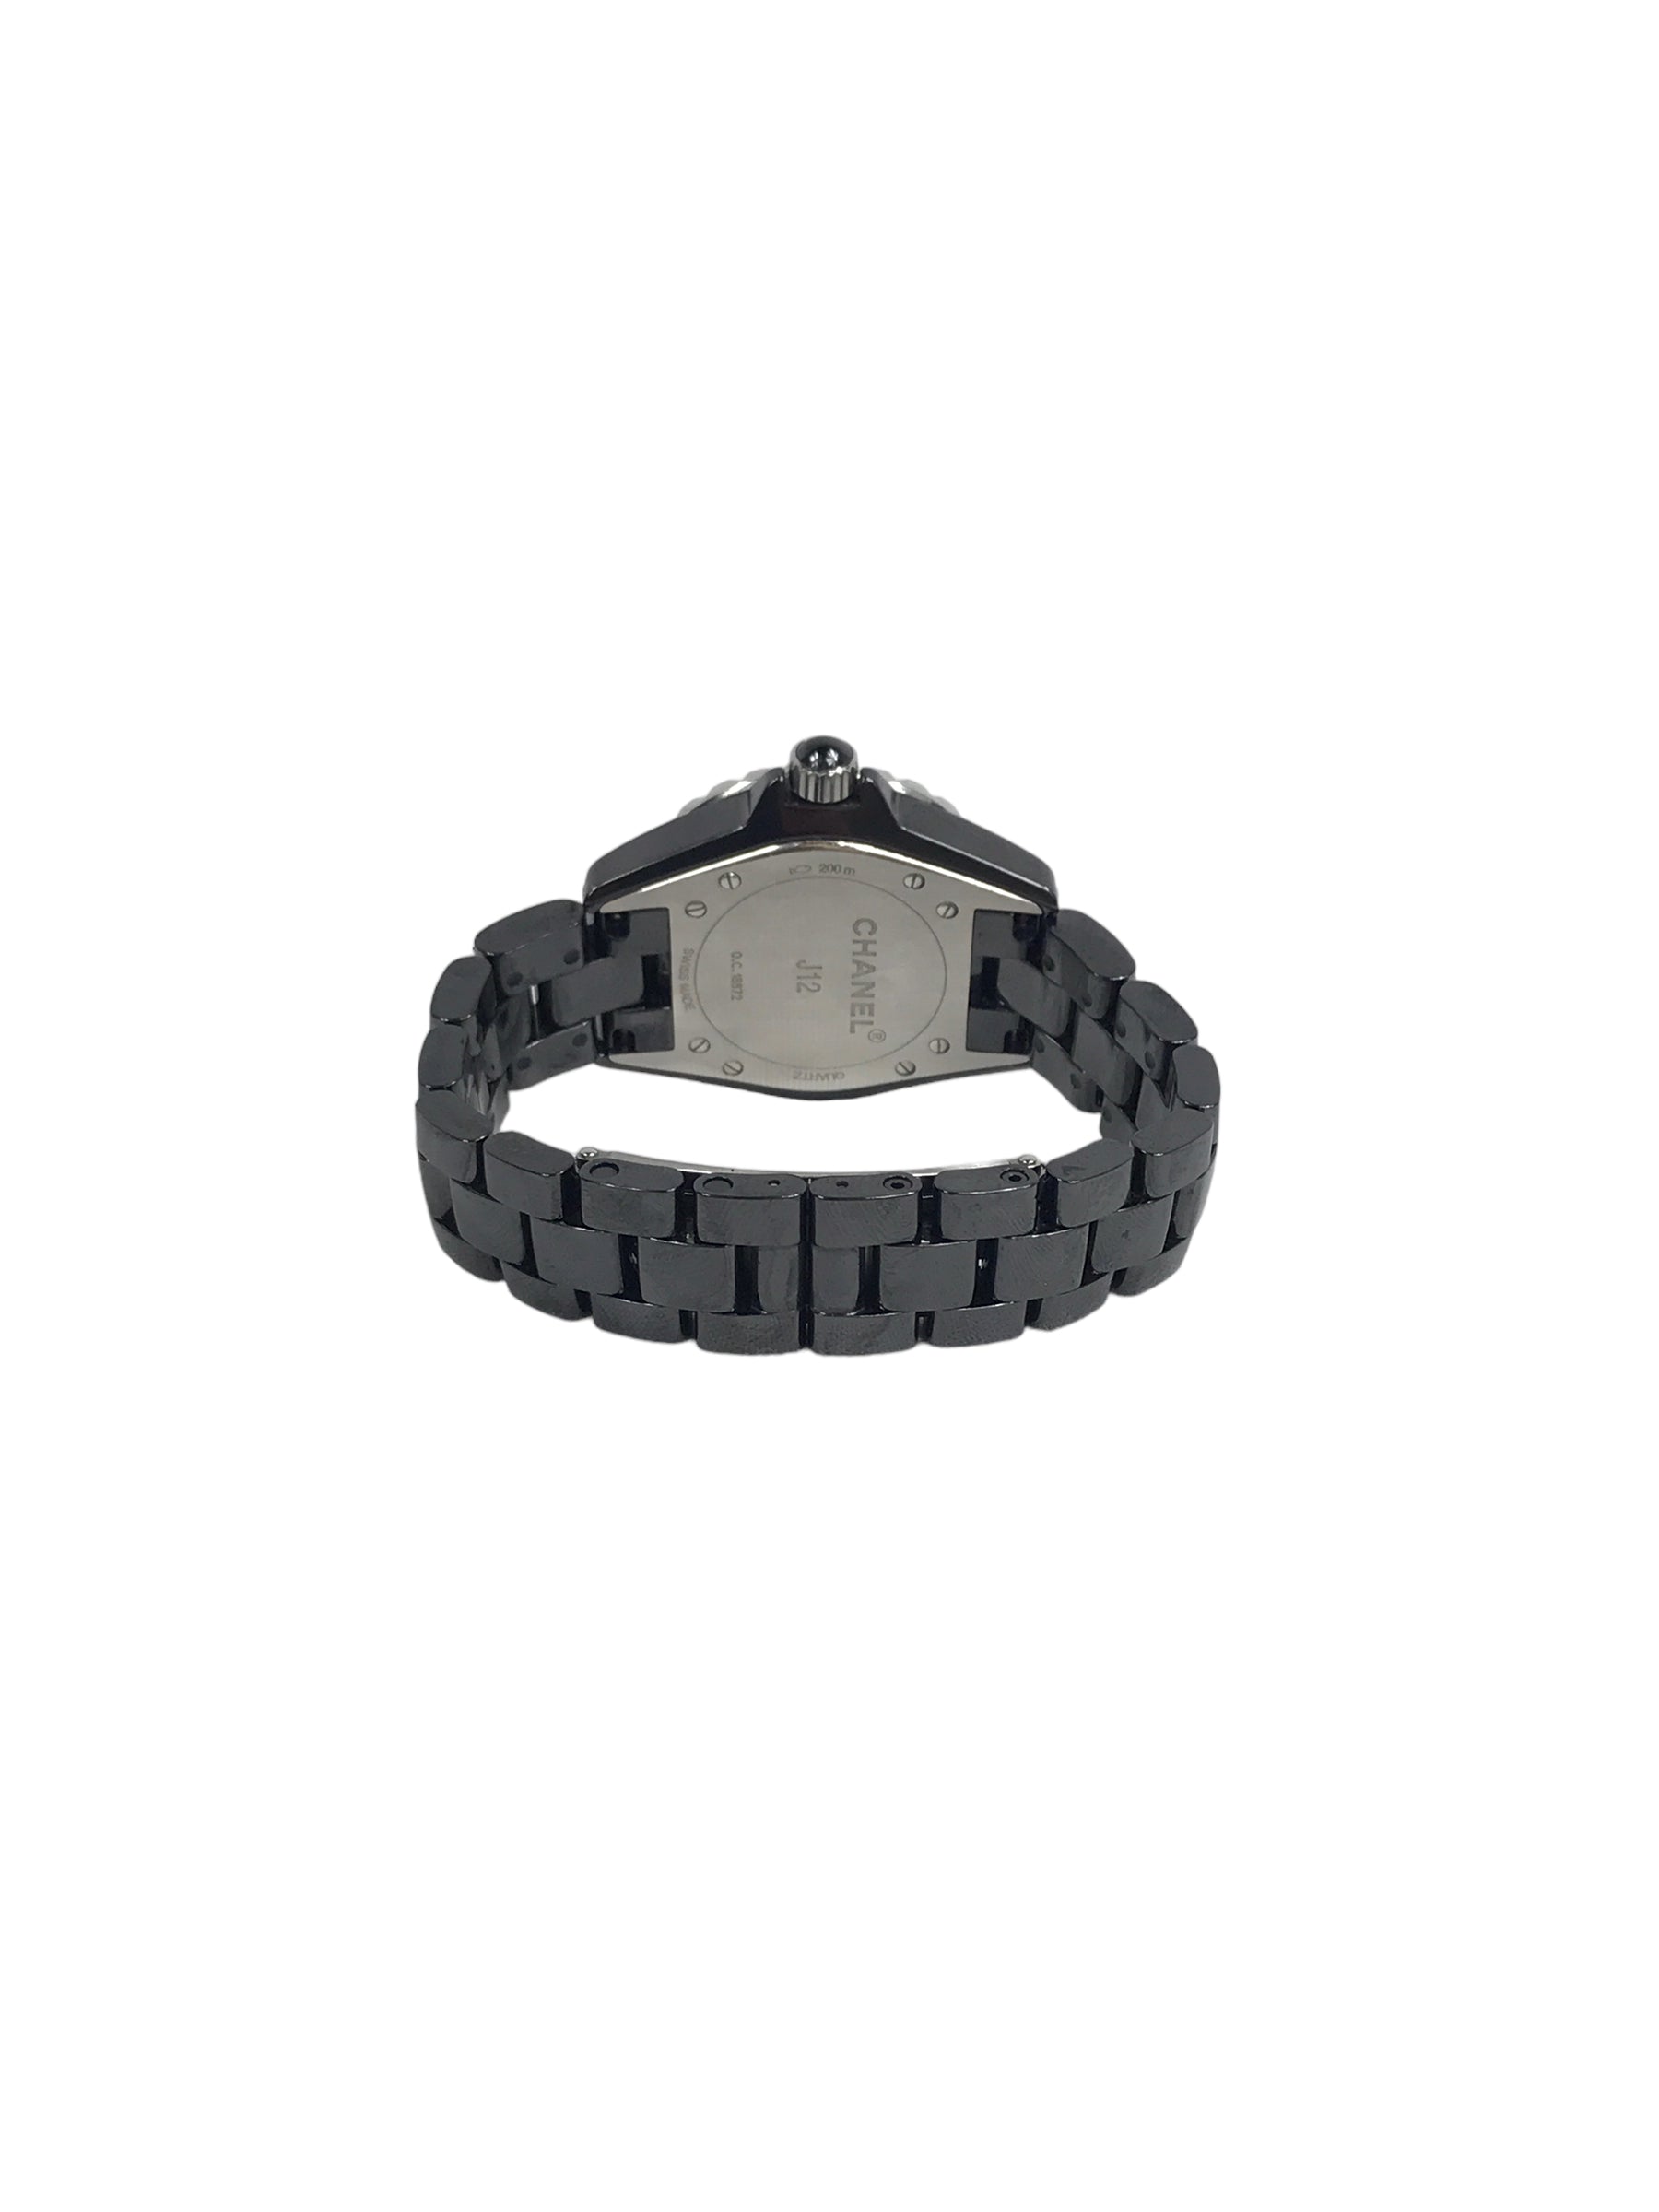 J12 Black Ceramic 33mm w/accent Diamond Watch